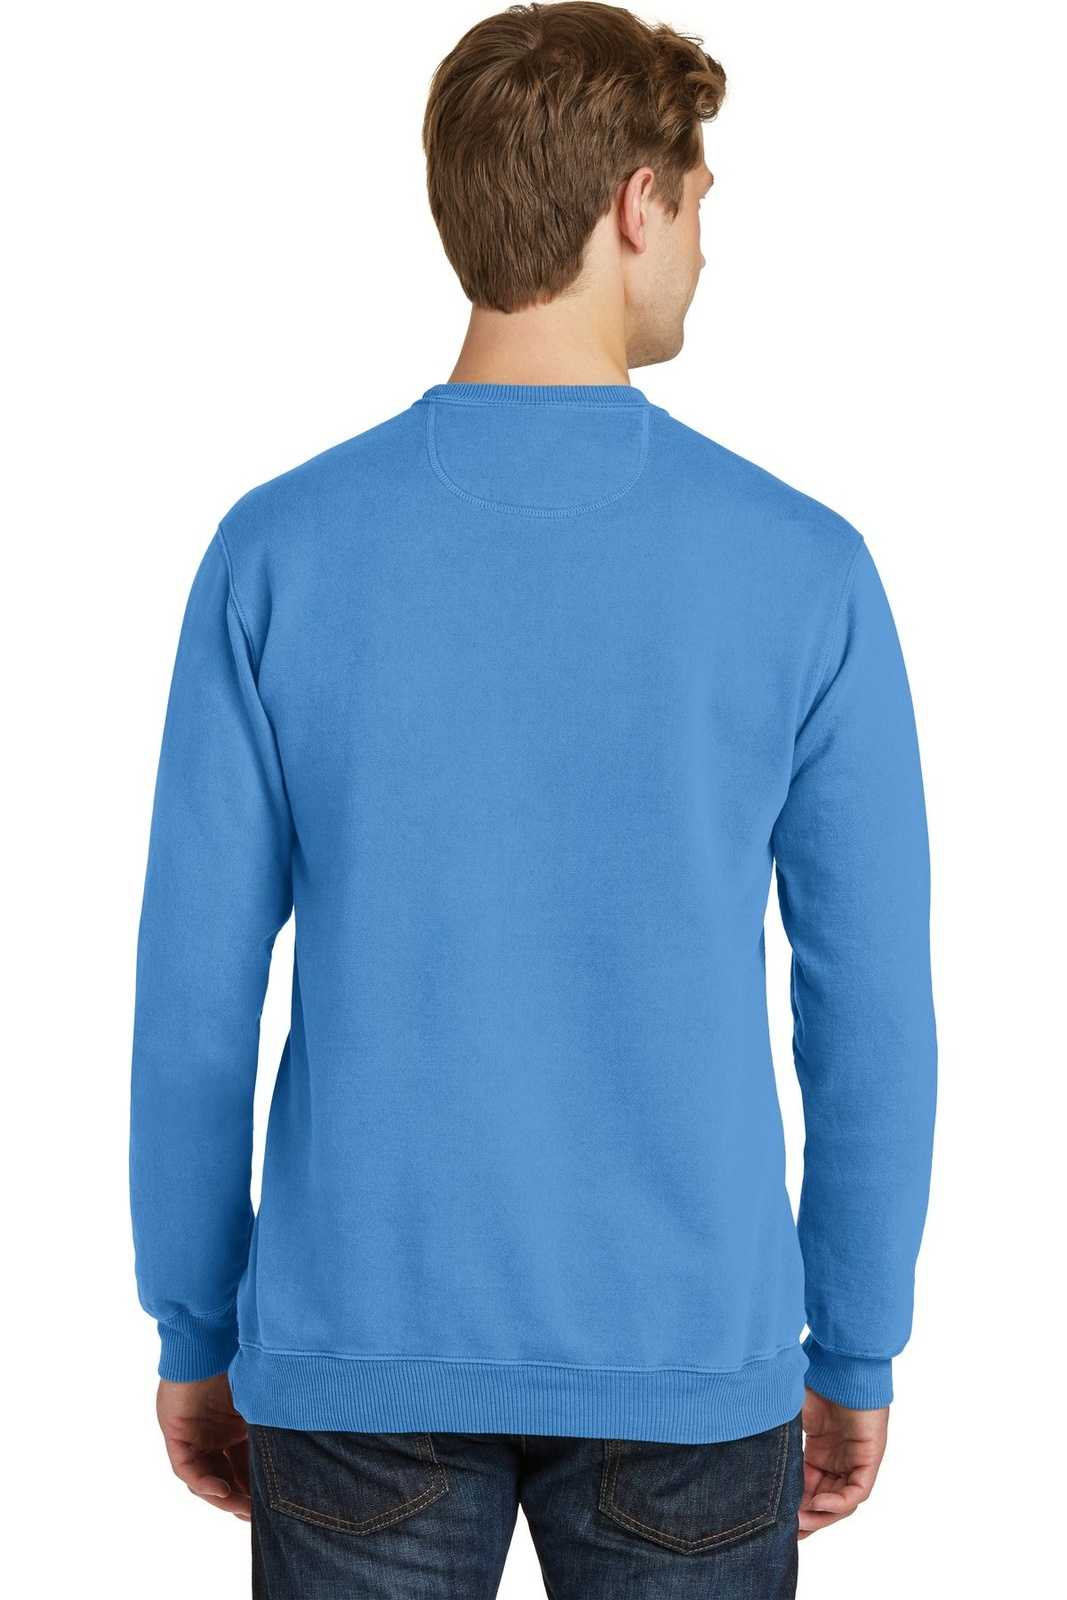 Port & Company PC098 Beach Wash Garment-Dyed Sweatshirt - Blue Moon - HIT a Double - 1